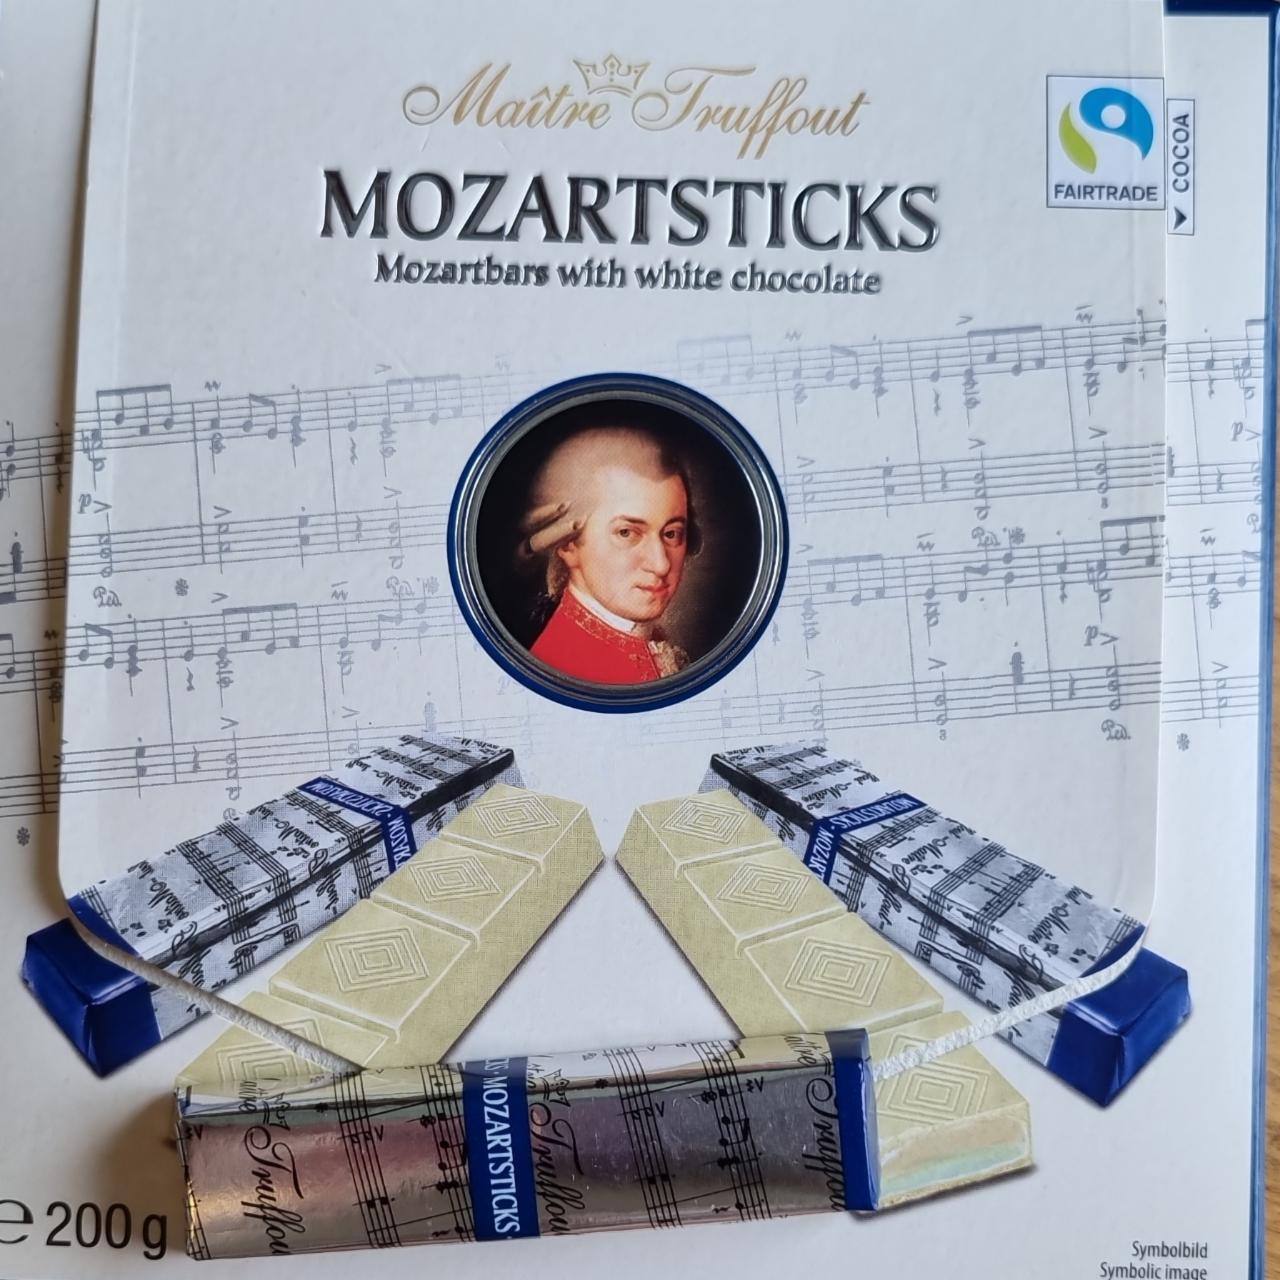 Fotografie - Mozartsticks Mozartbars with white chocolate Maître Truffout